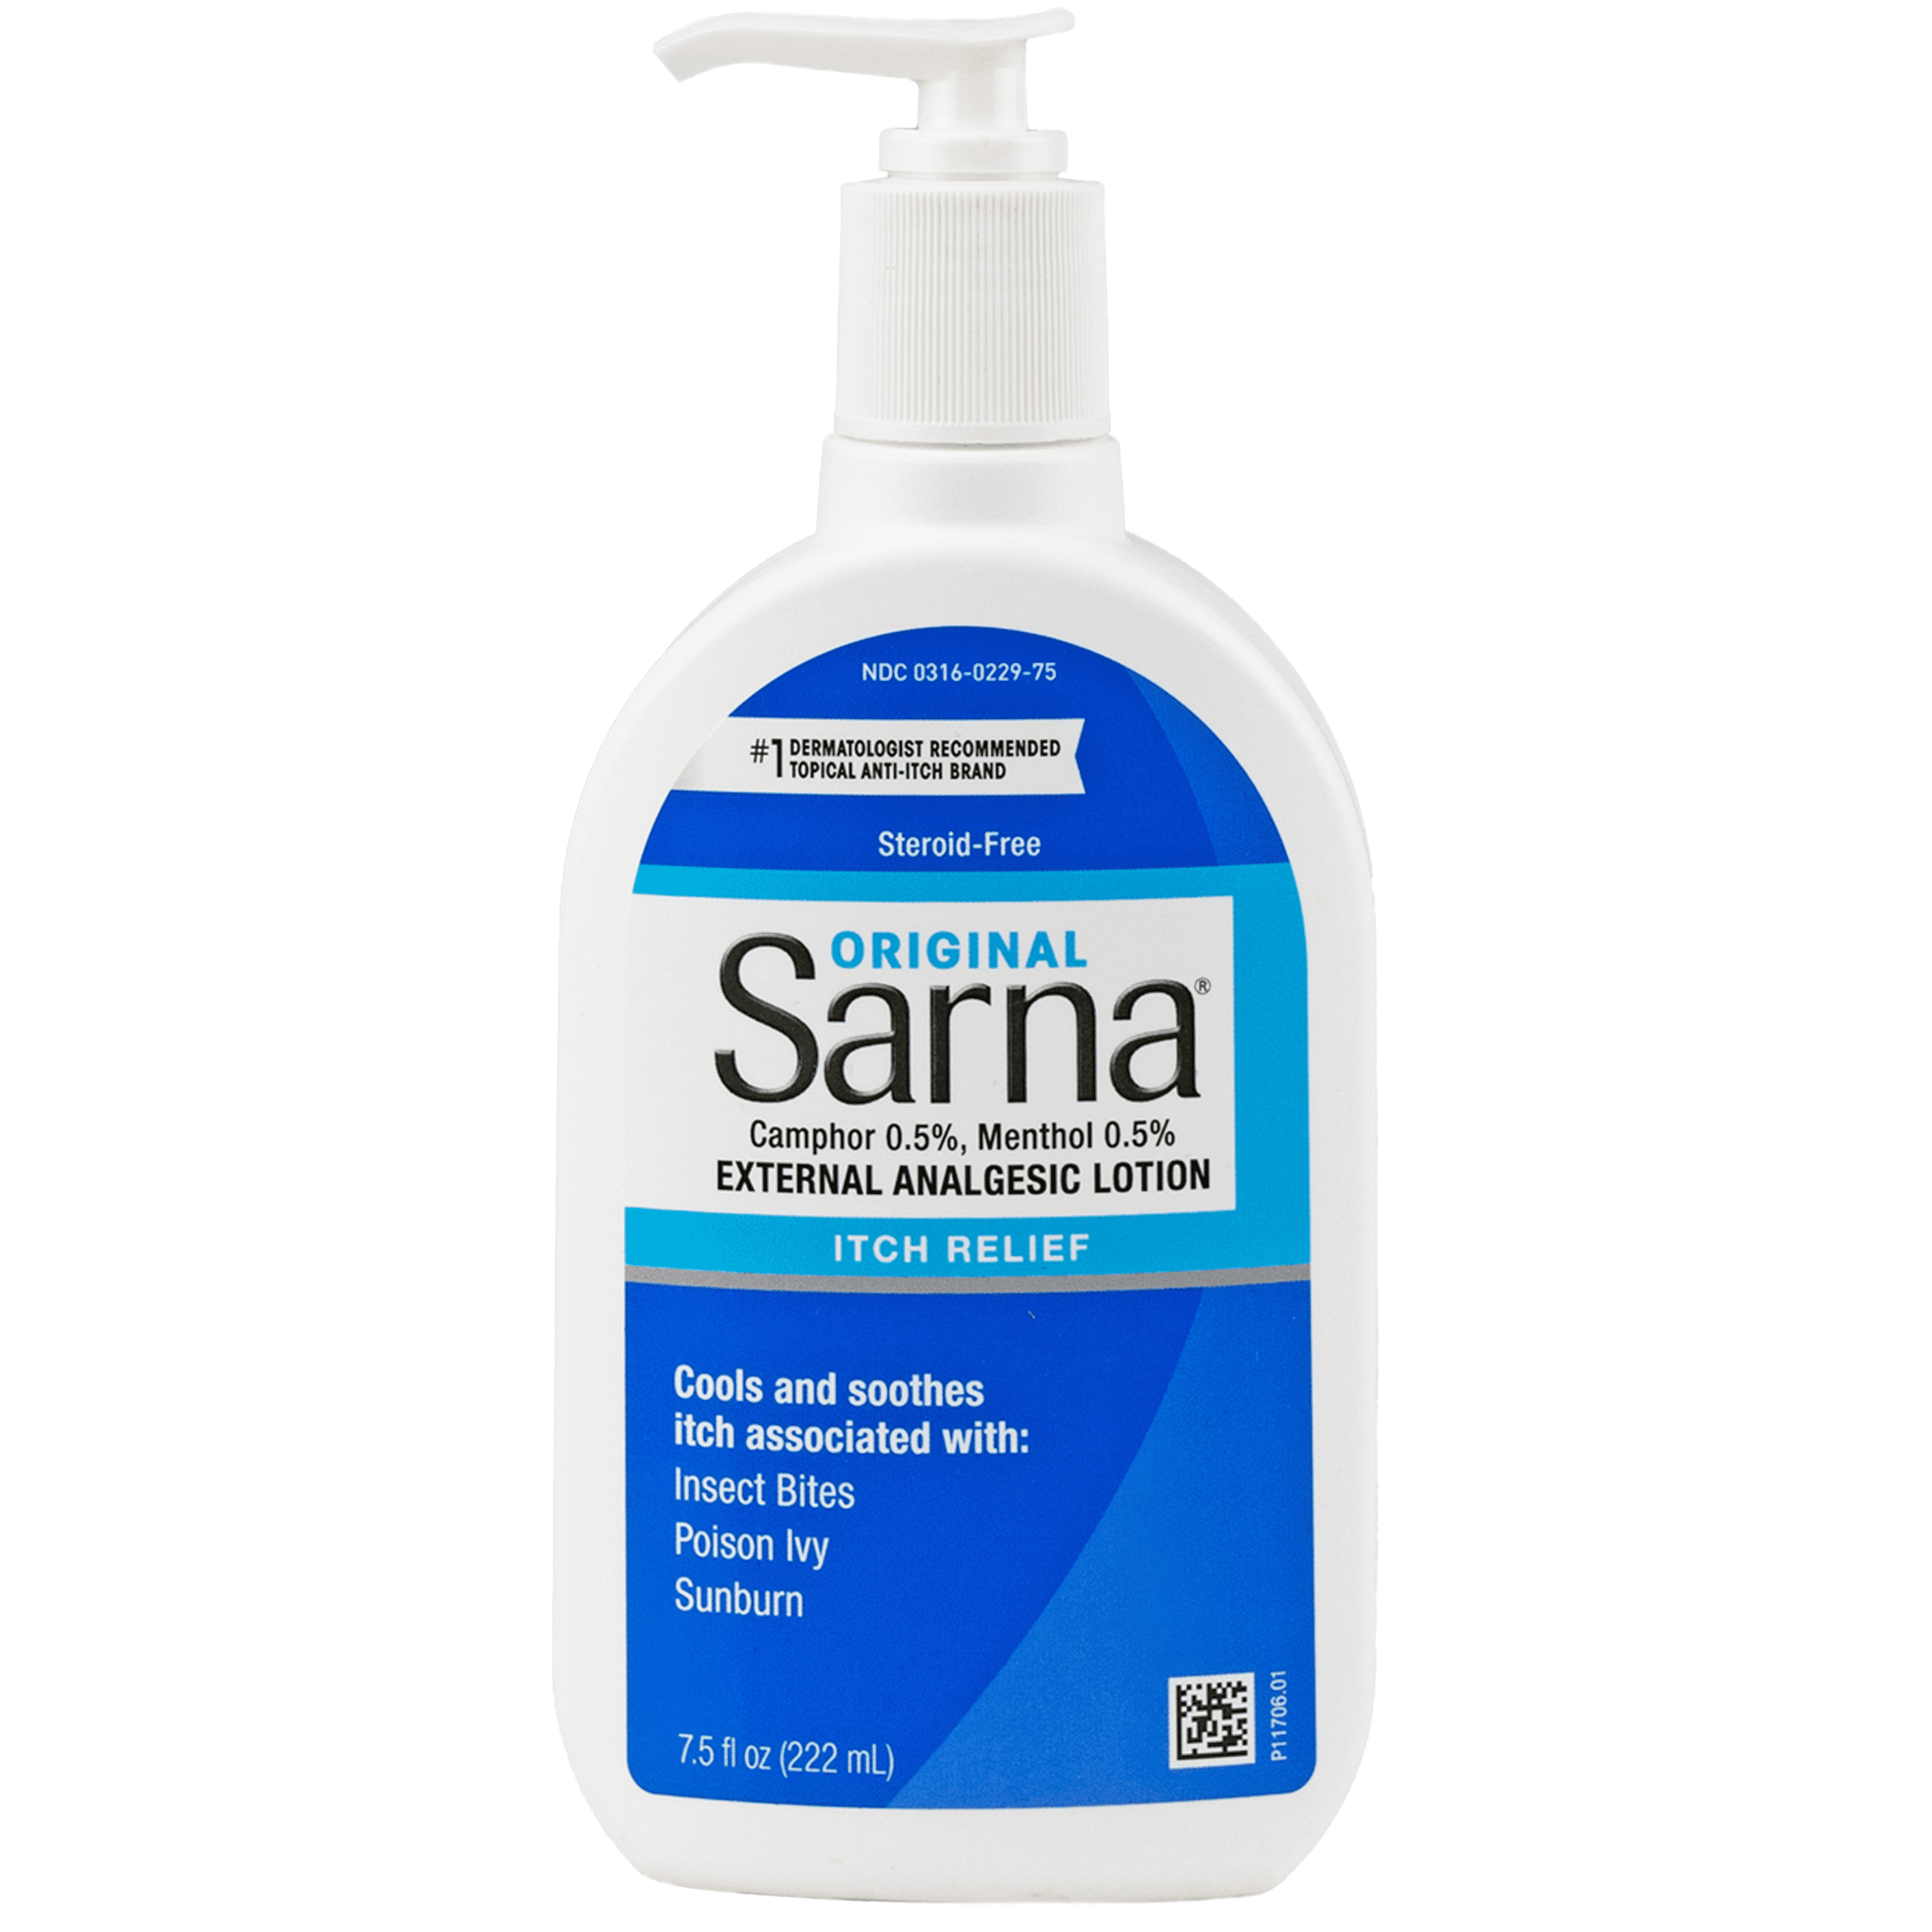 Sarna Original Steroid-Free Anti-Itch Lotion, 7.5 oz